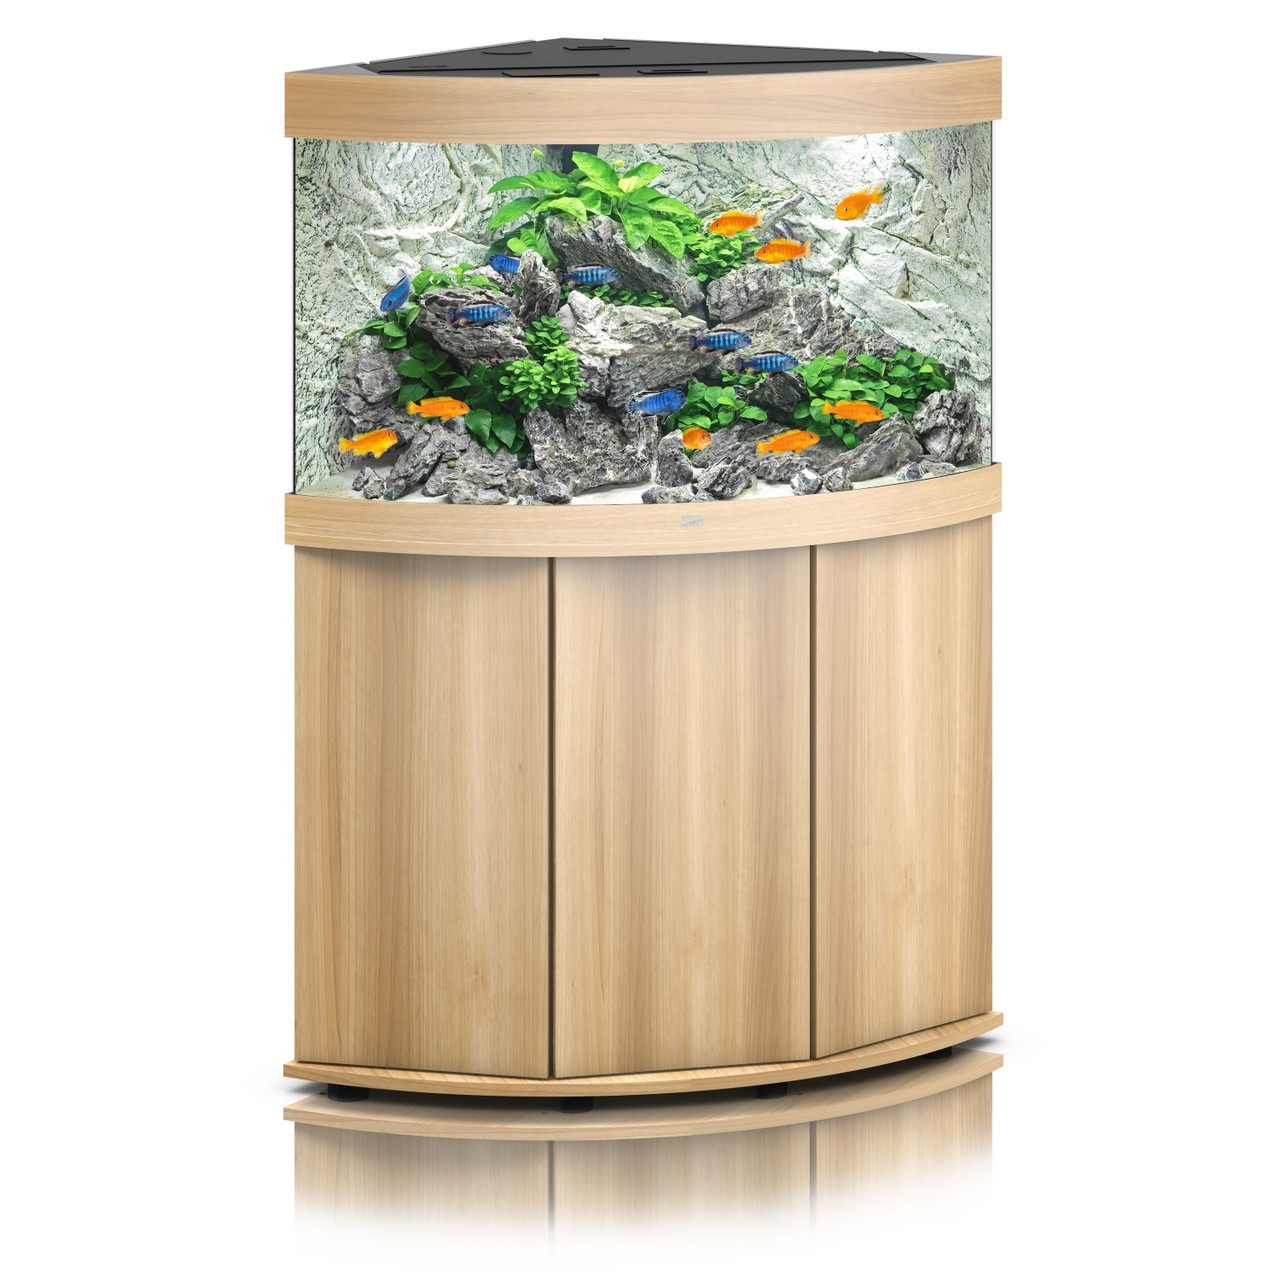 Amorous Illustrer Akkumulering Trigon 190 Light Wood | Juwel Aquarium Kit | World of Water